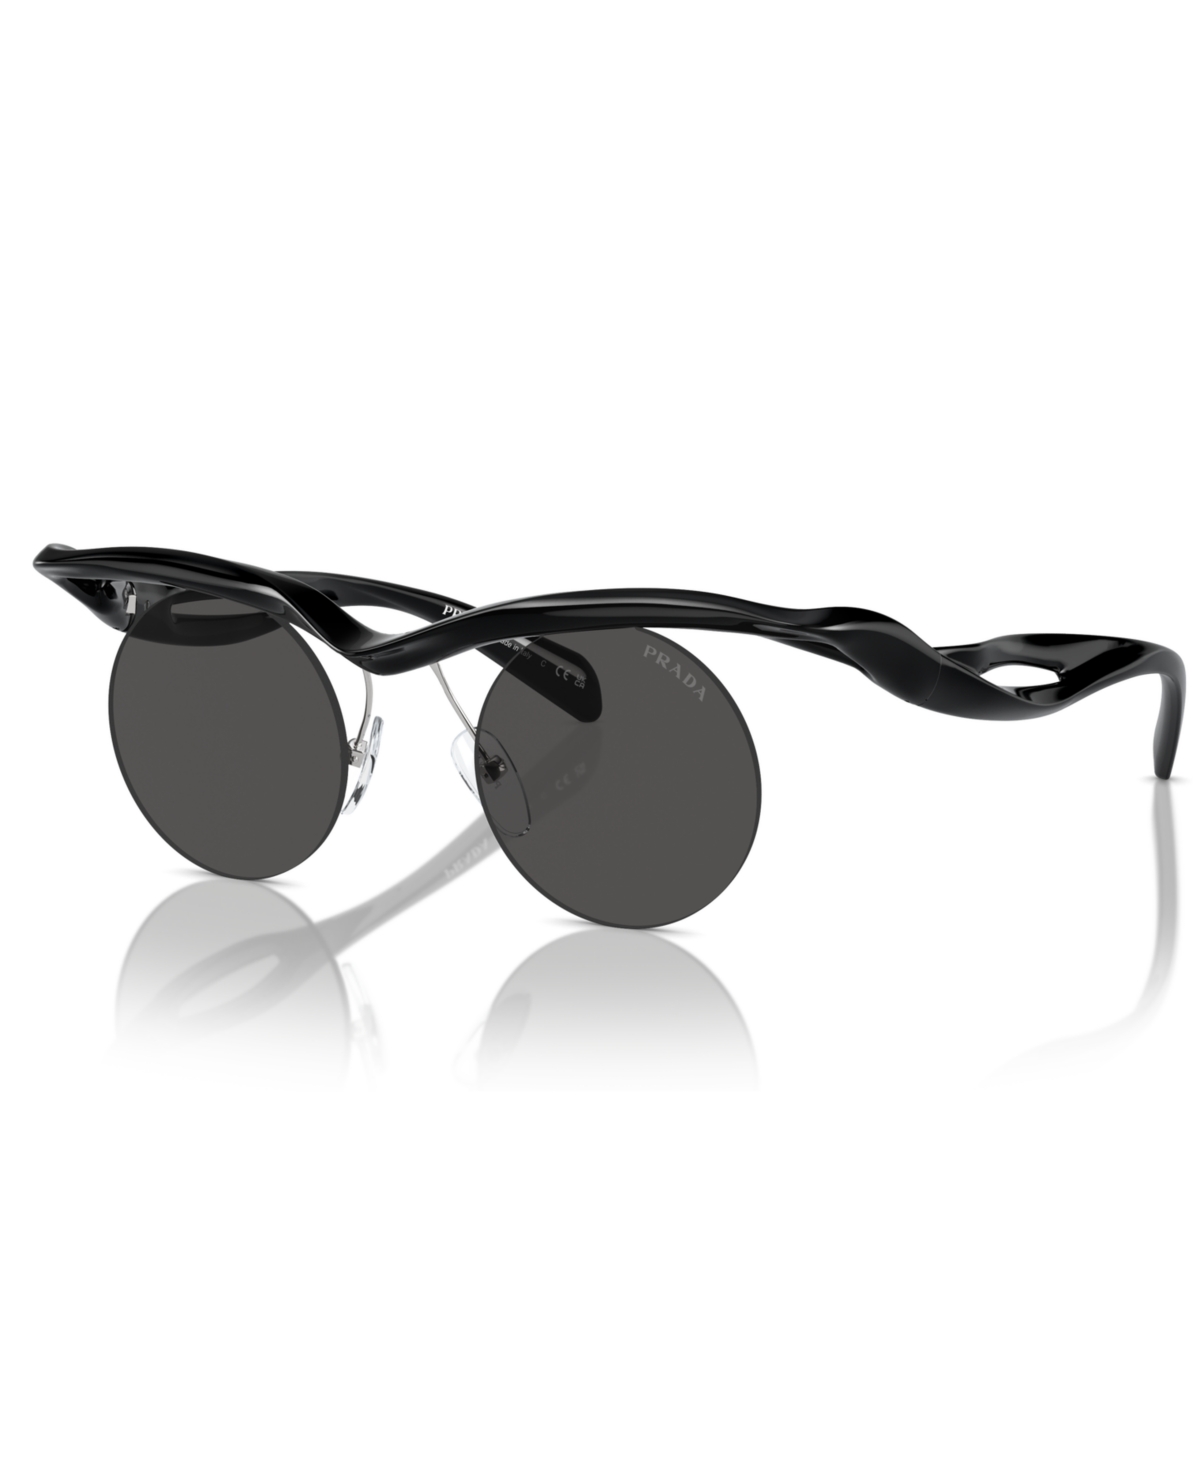 Women's Sunglasses, Pr A24S - Black